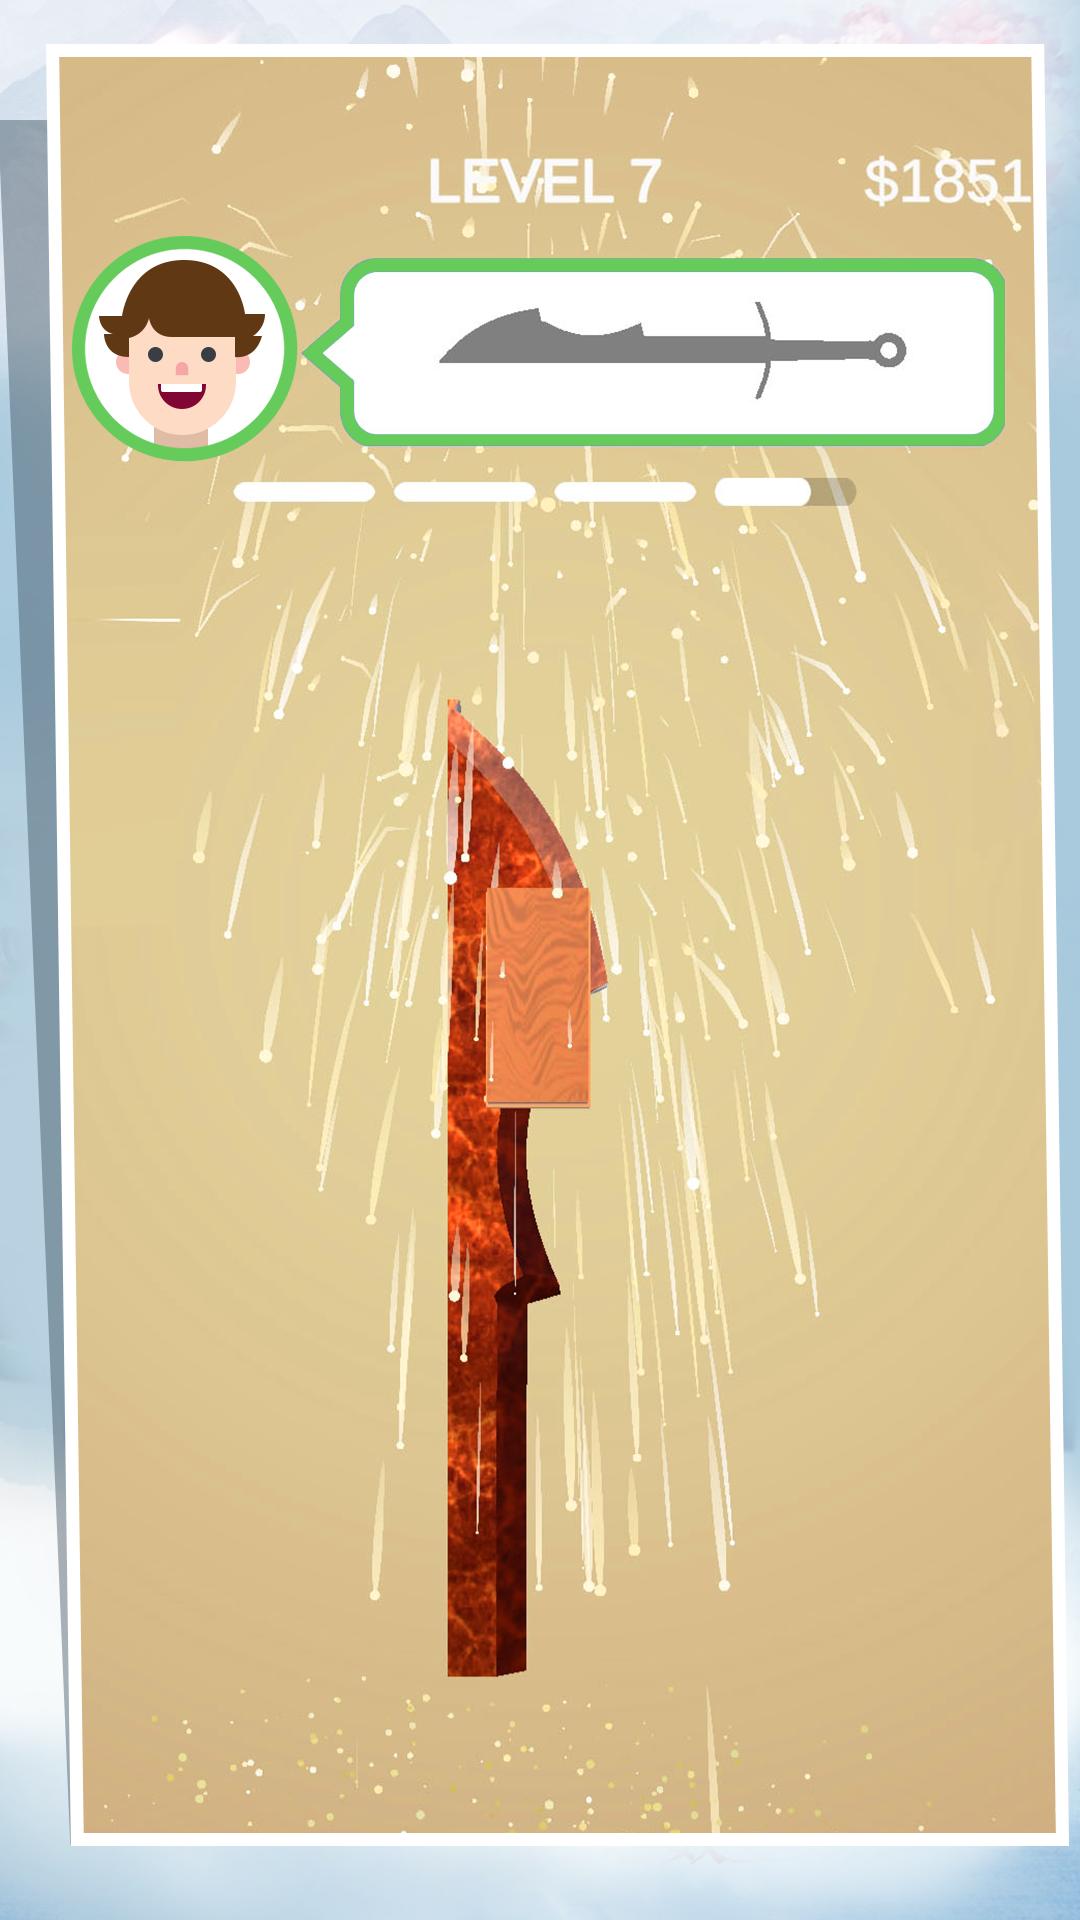 Stand knife mod. Polishing Knife. Knife_Polisher. Полиш игра. Poster with Knife.